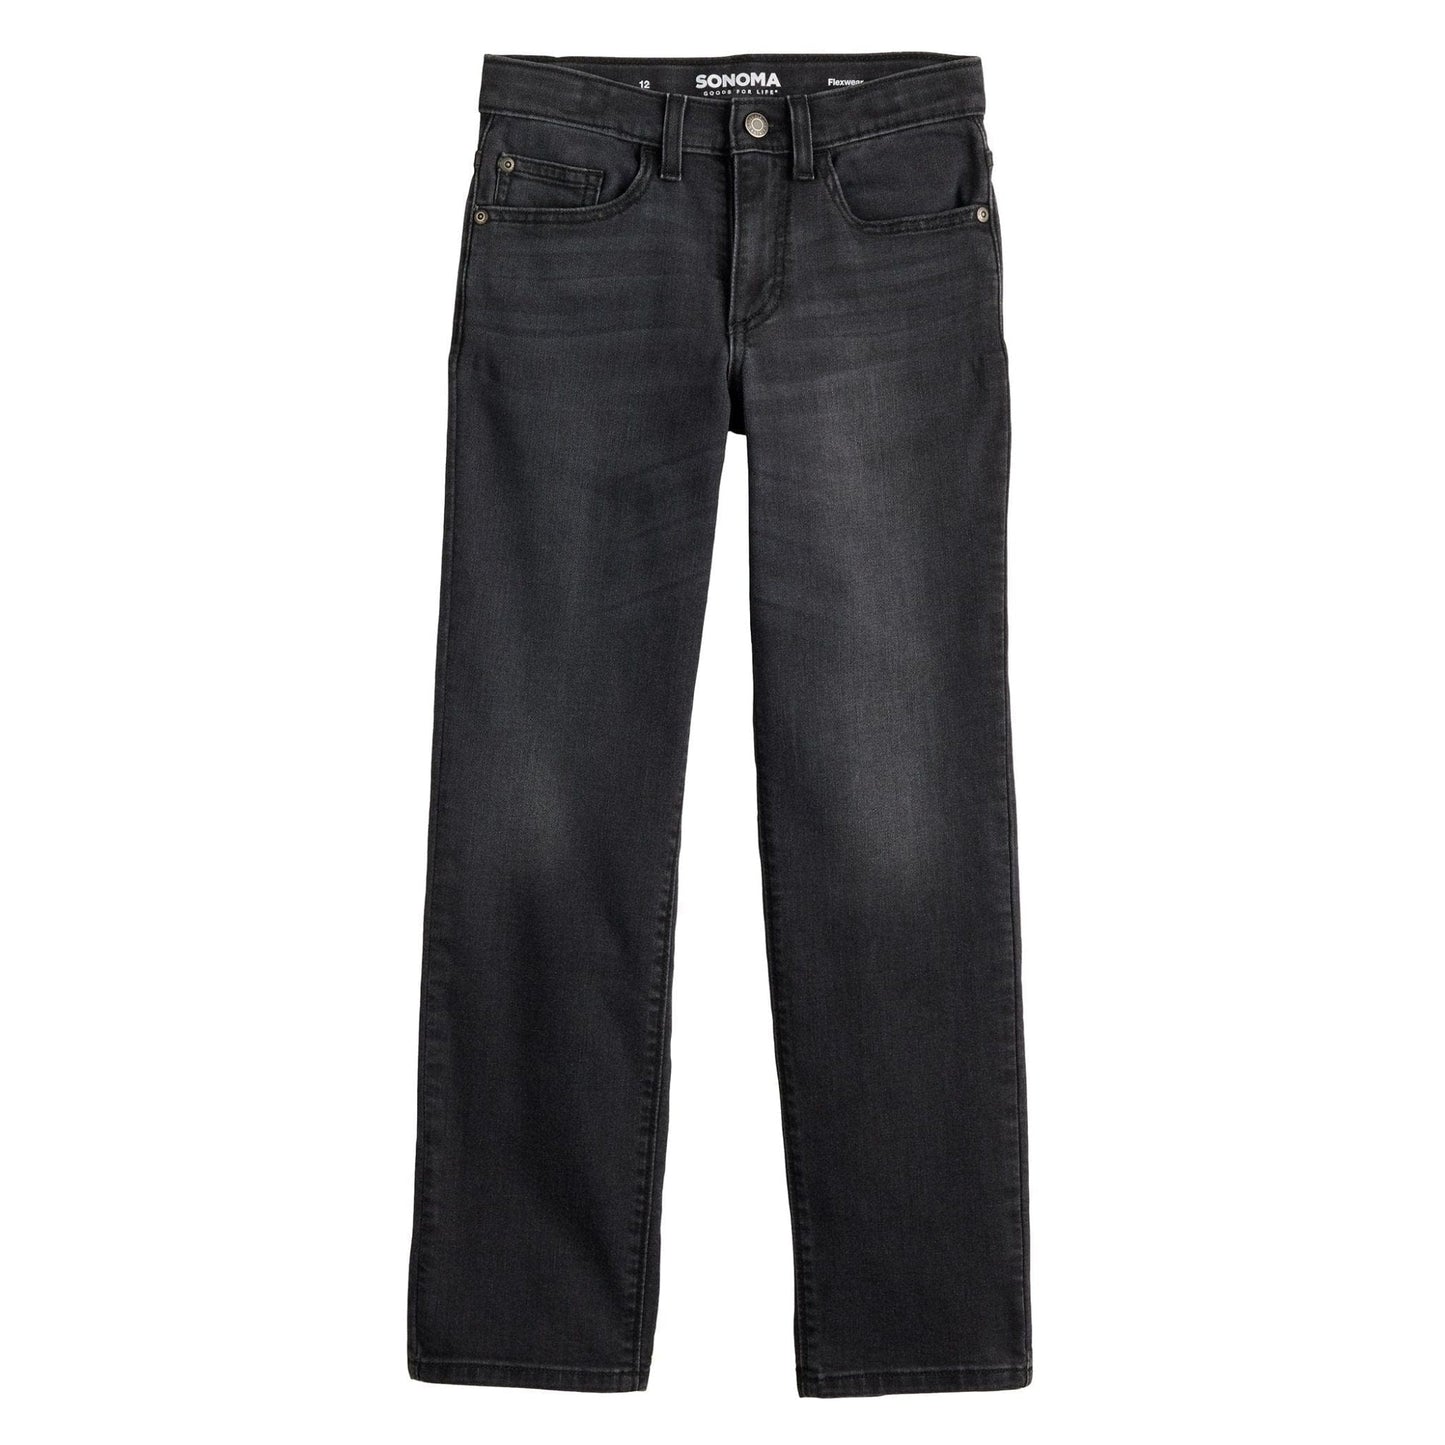 Boys 7-20 Flex-wear Straight Jeans in Regular, Slim & Husky - CLASSY CLOSET BOUTIQUEBoys 7-20 Flex-wear Straight Jeans in Regular, Slim & Huskyjeans4986116Black7 SLIM